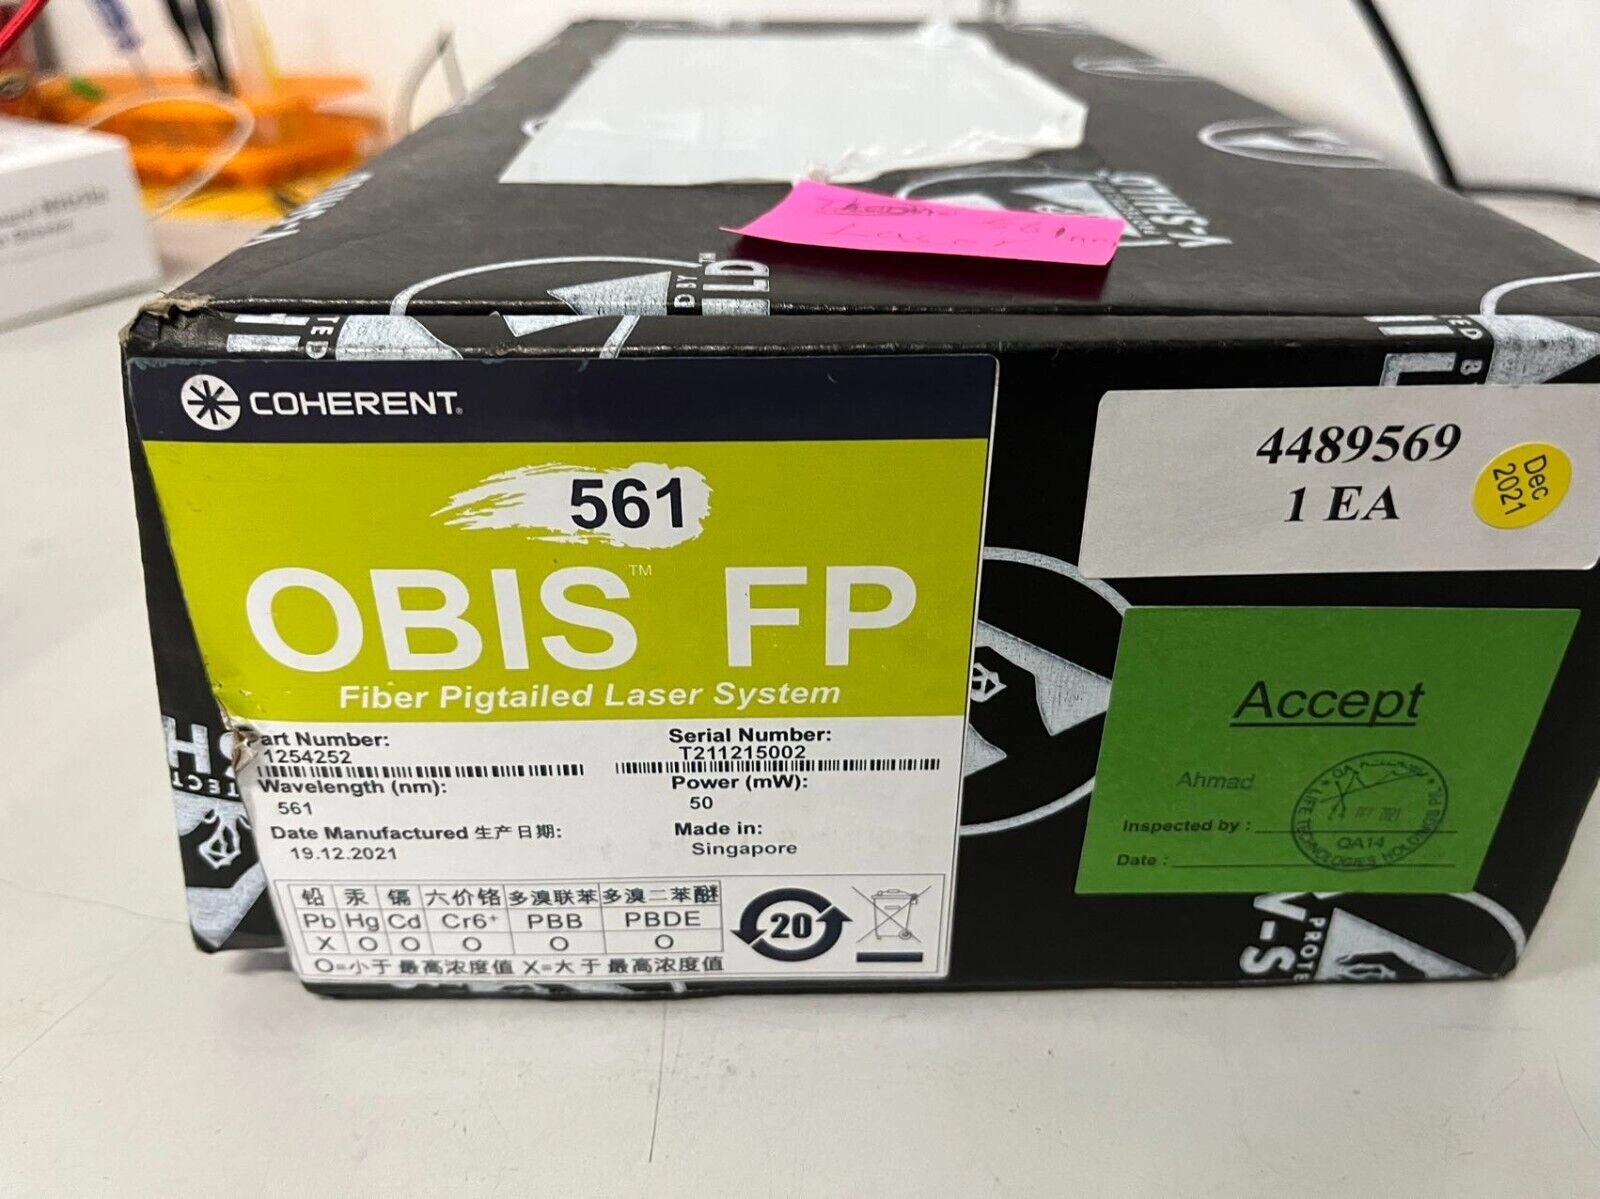 Coherent OBIS LP 561 nm Fiber Laser System for Fis